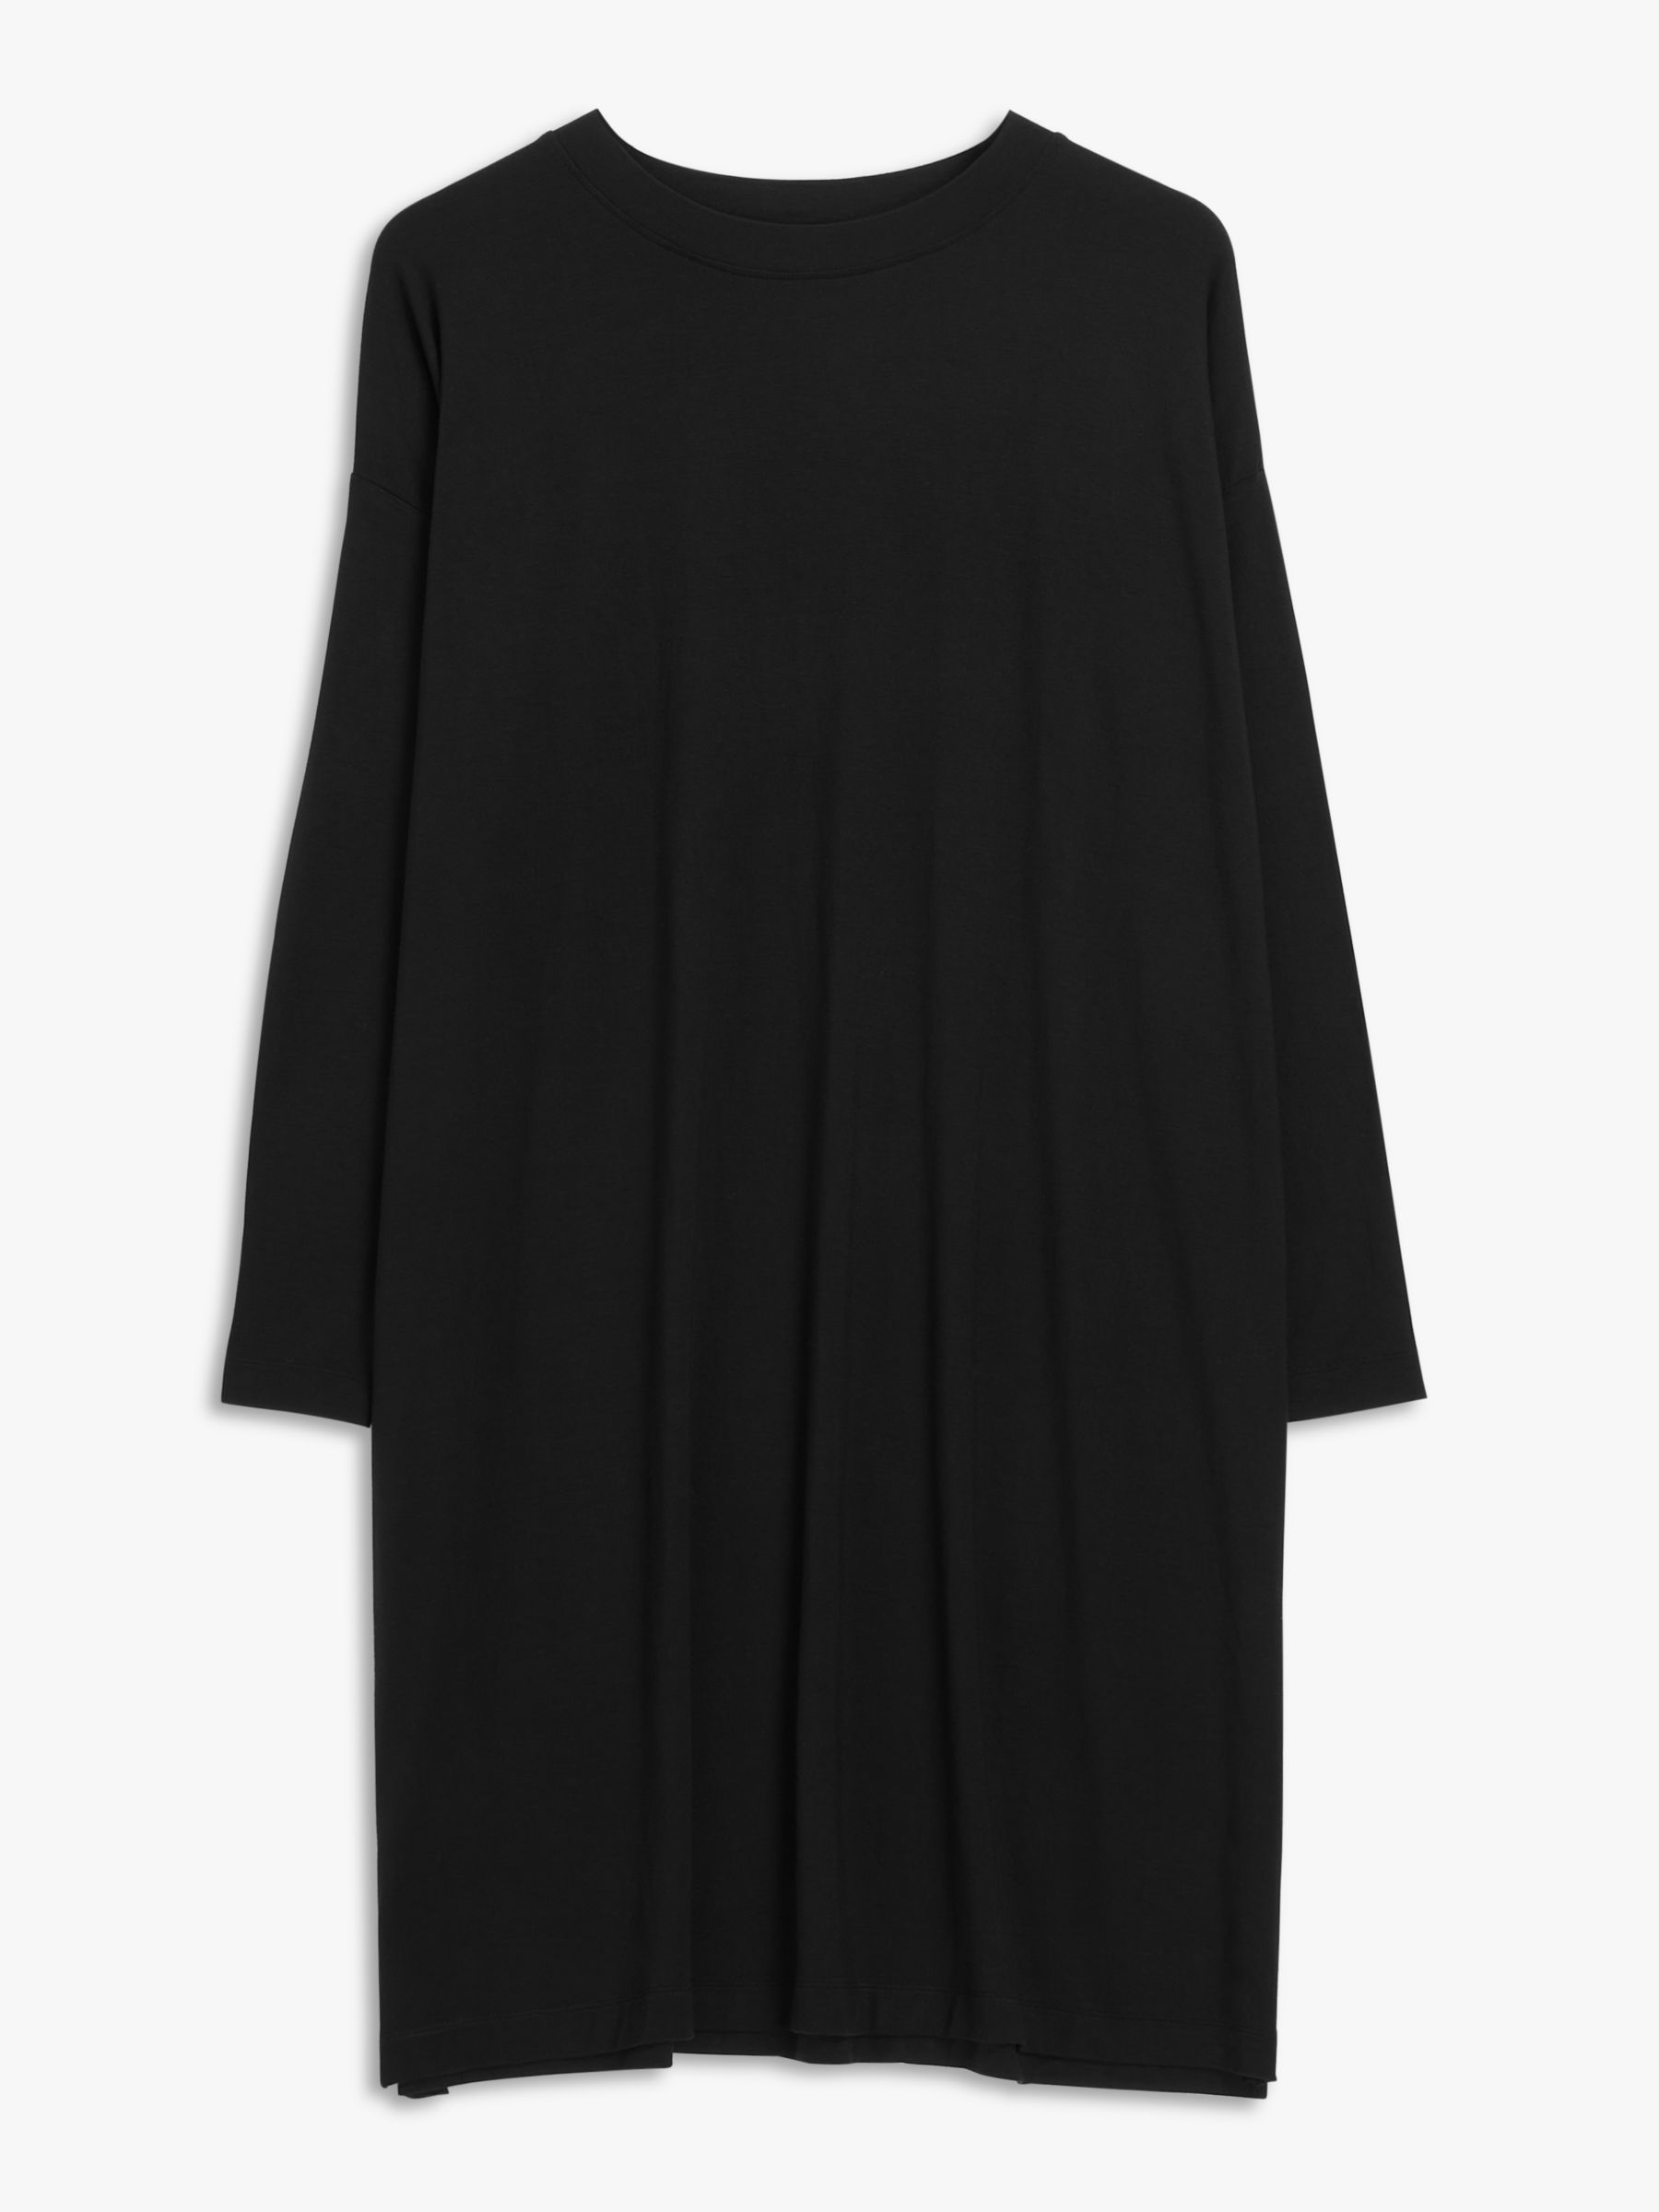 John Lewis ANYDAY Oversized Plain Jersey Dress, Black, XS